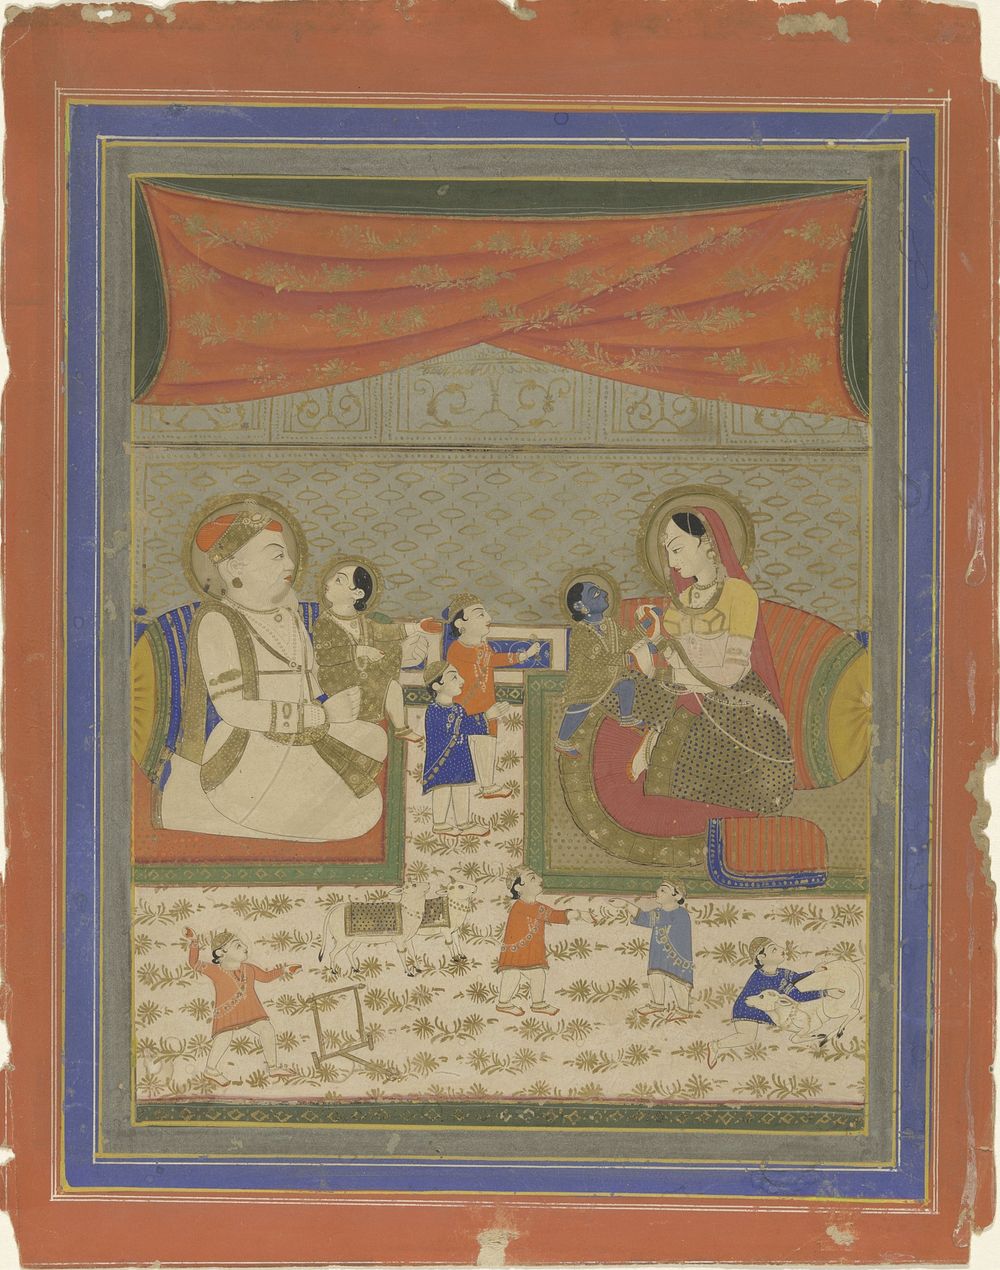 Nanda en Yasoda met Krishna en Balarama (c. 1800) by anonymous